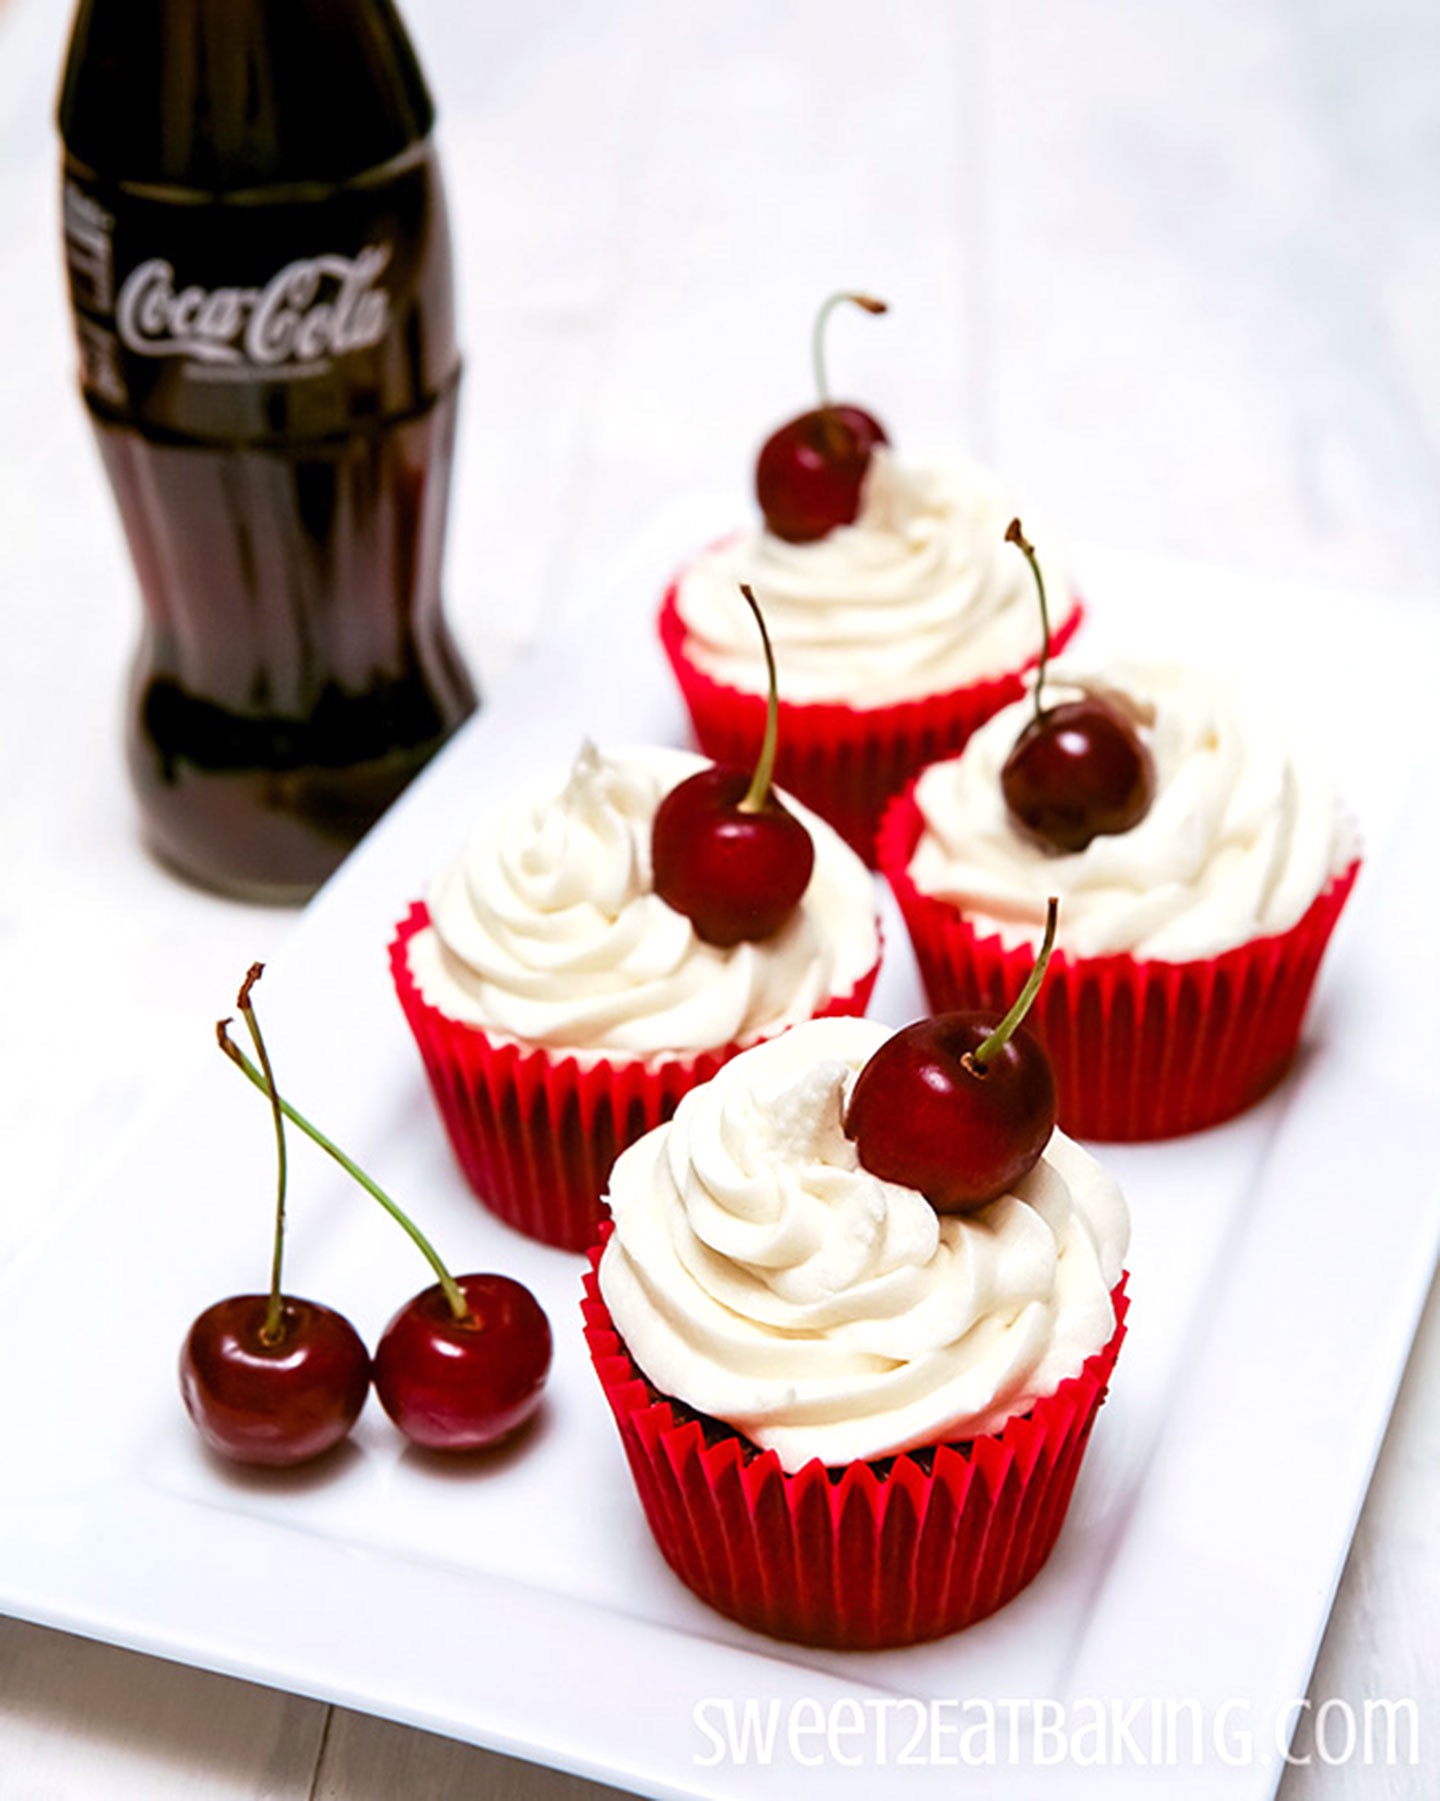 Cherry Coke Cupcakes Recipe by Sweet2EatBaking.com